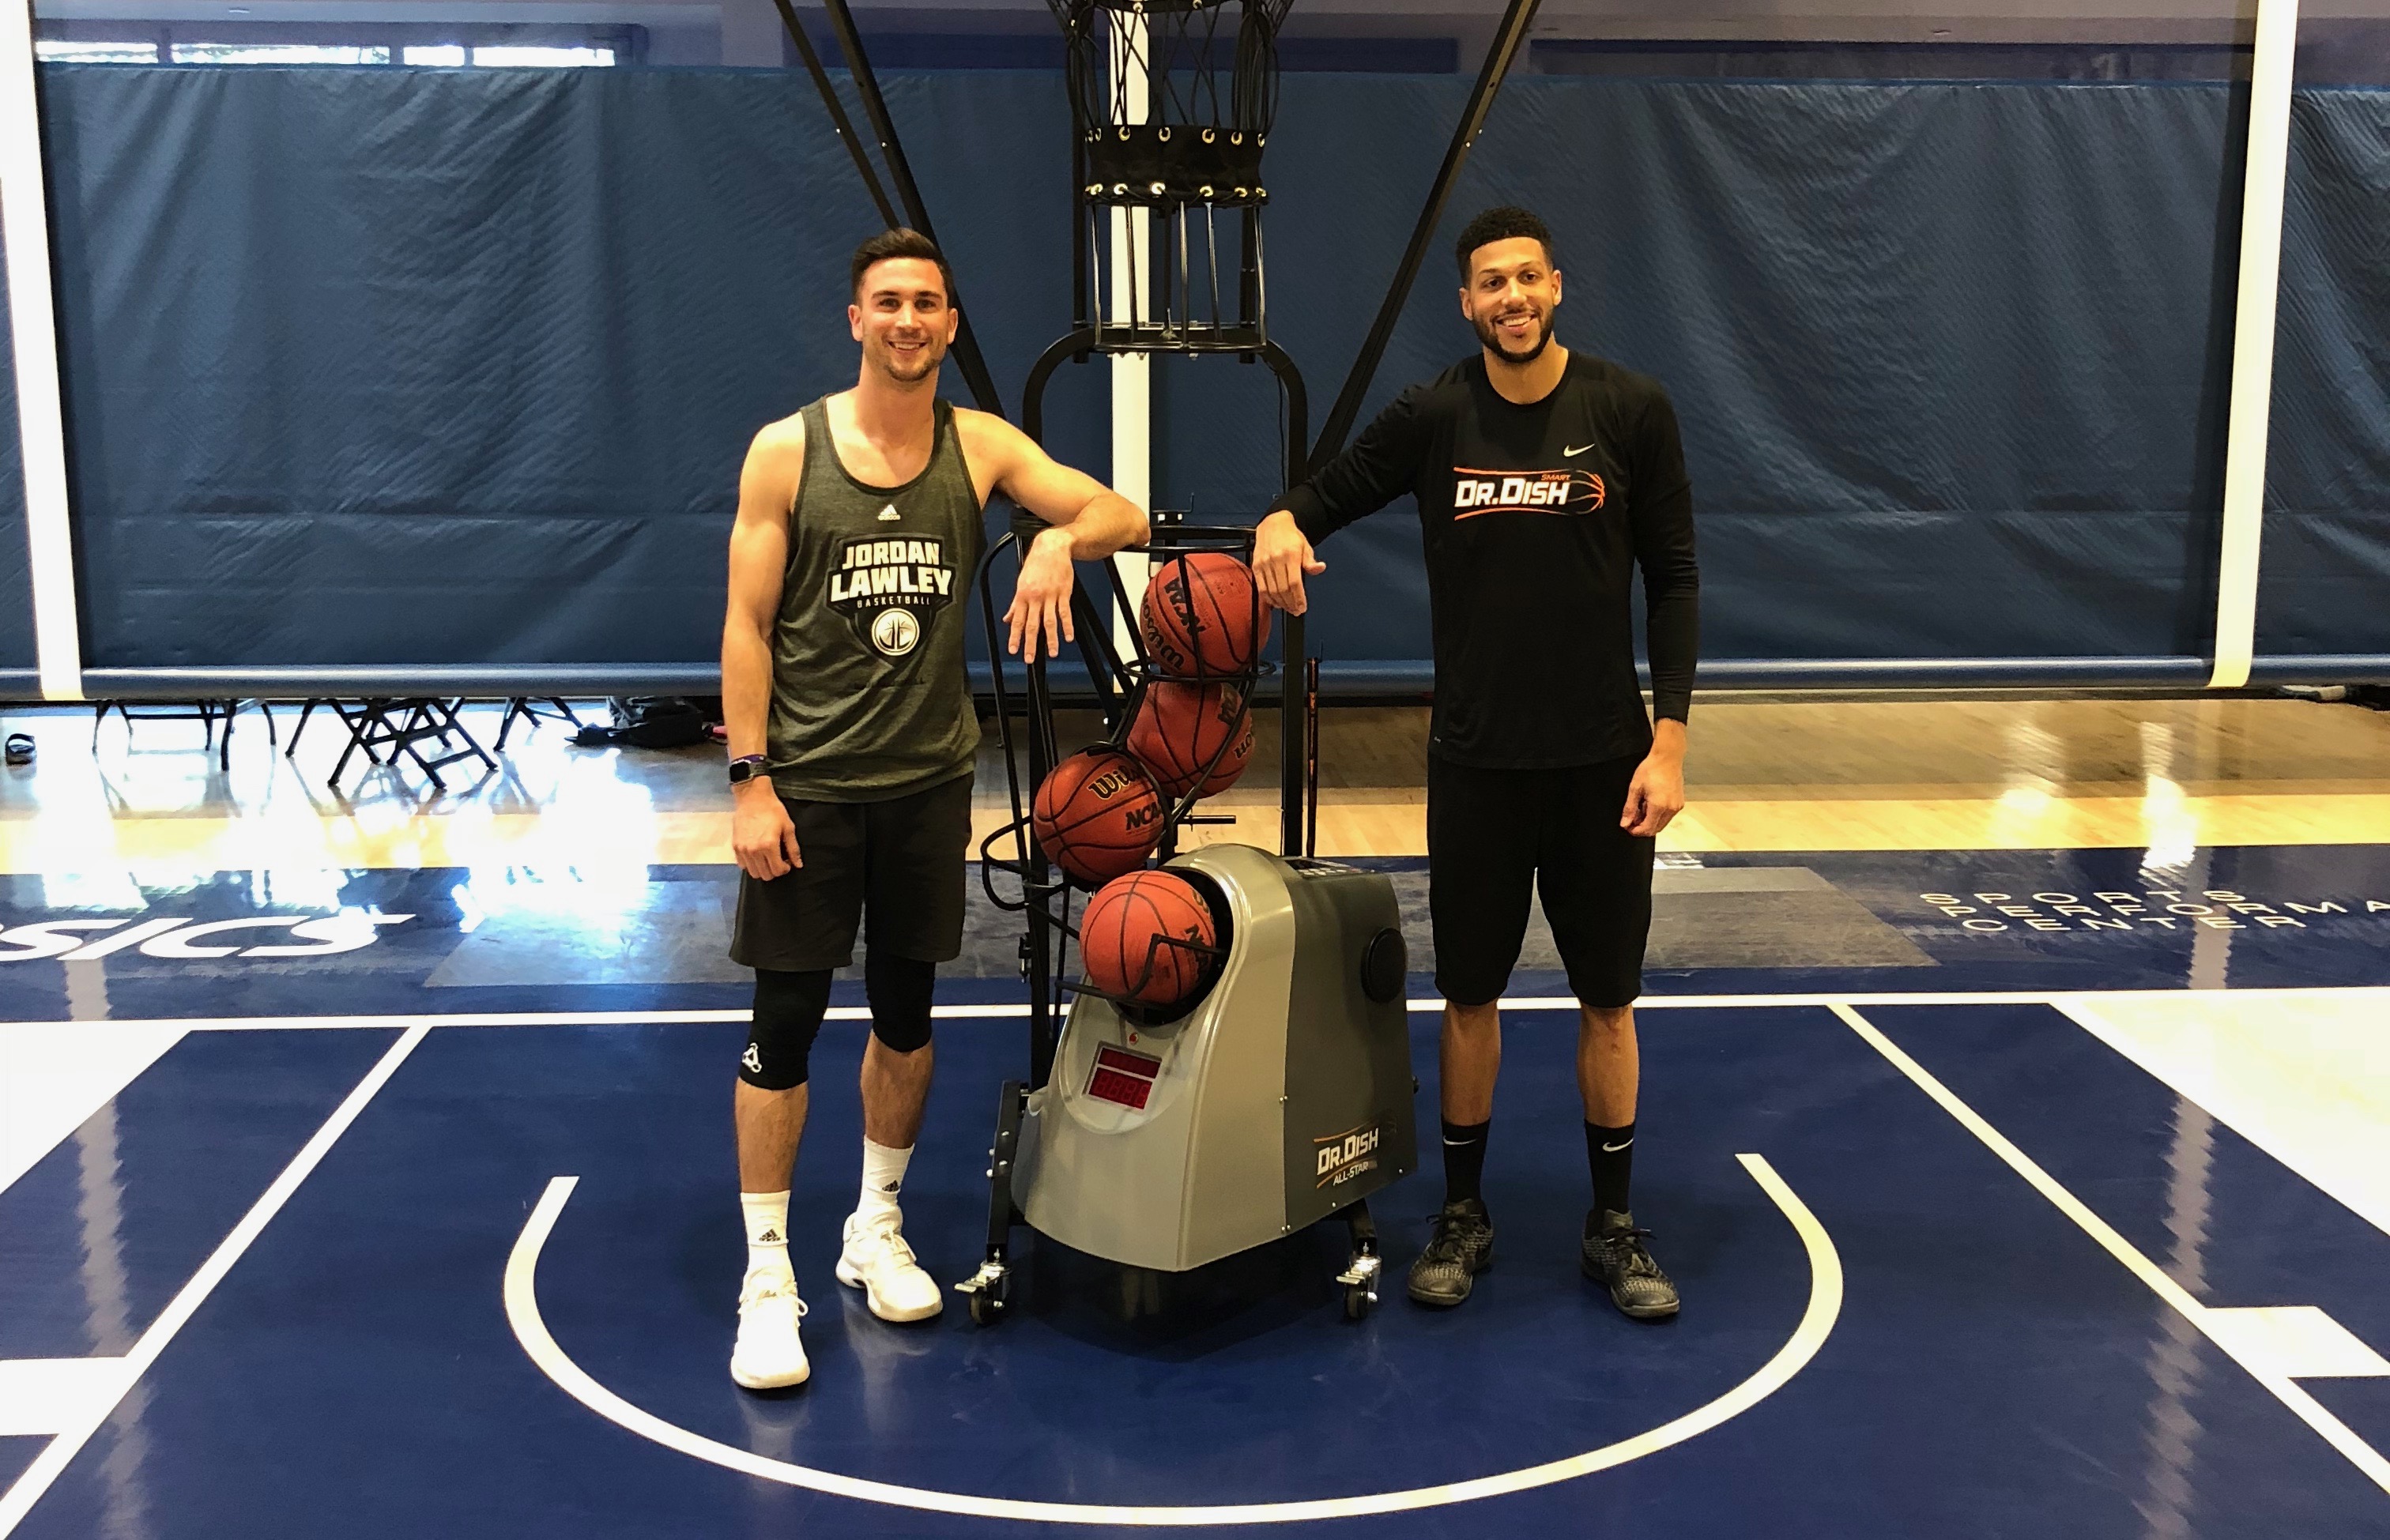 Basketball Drills: Triple Move Ball Handling with Jordan Lawley